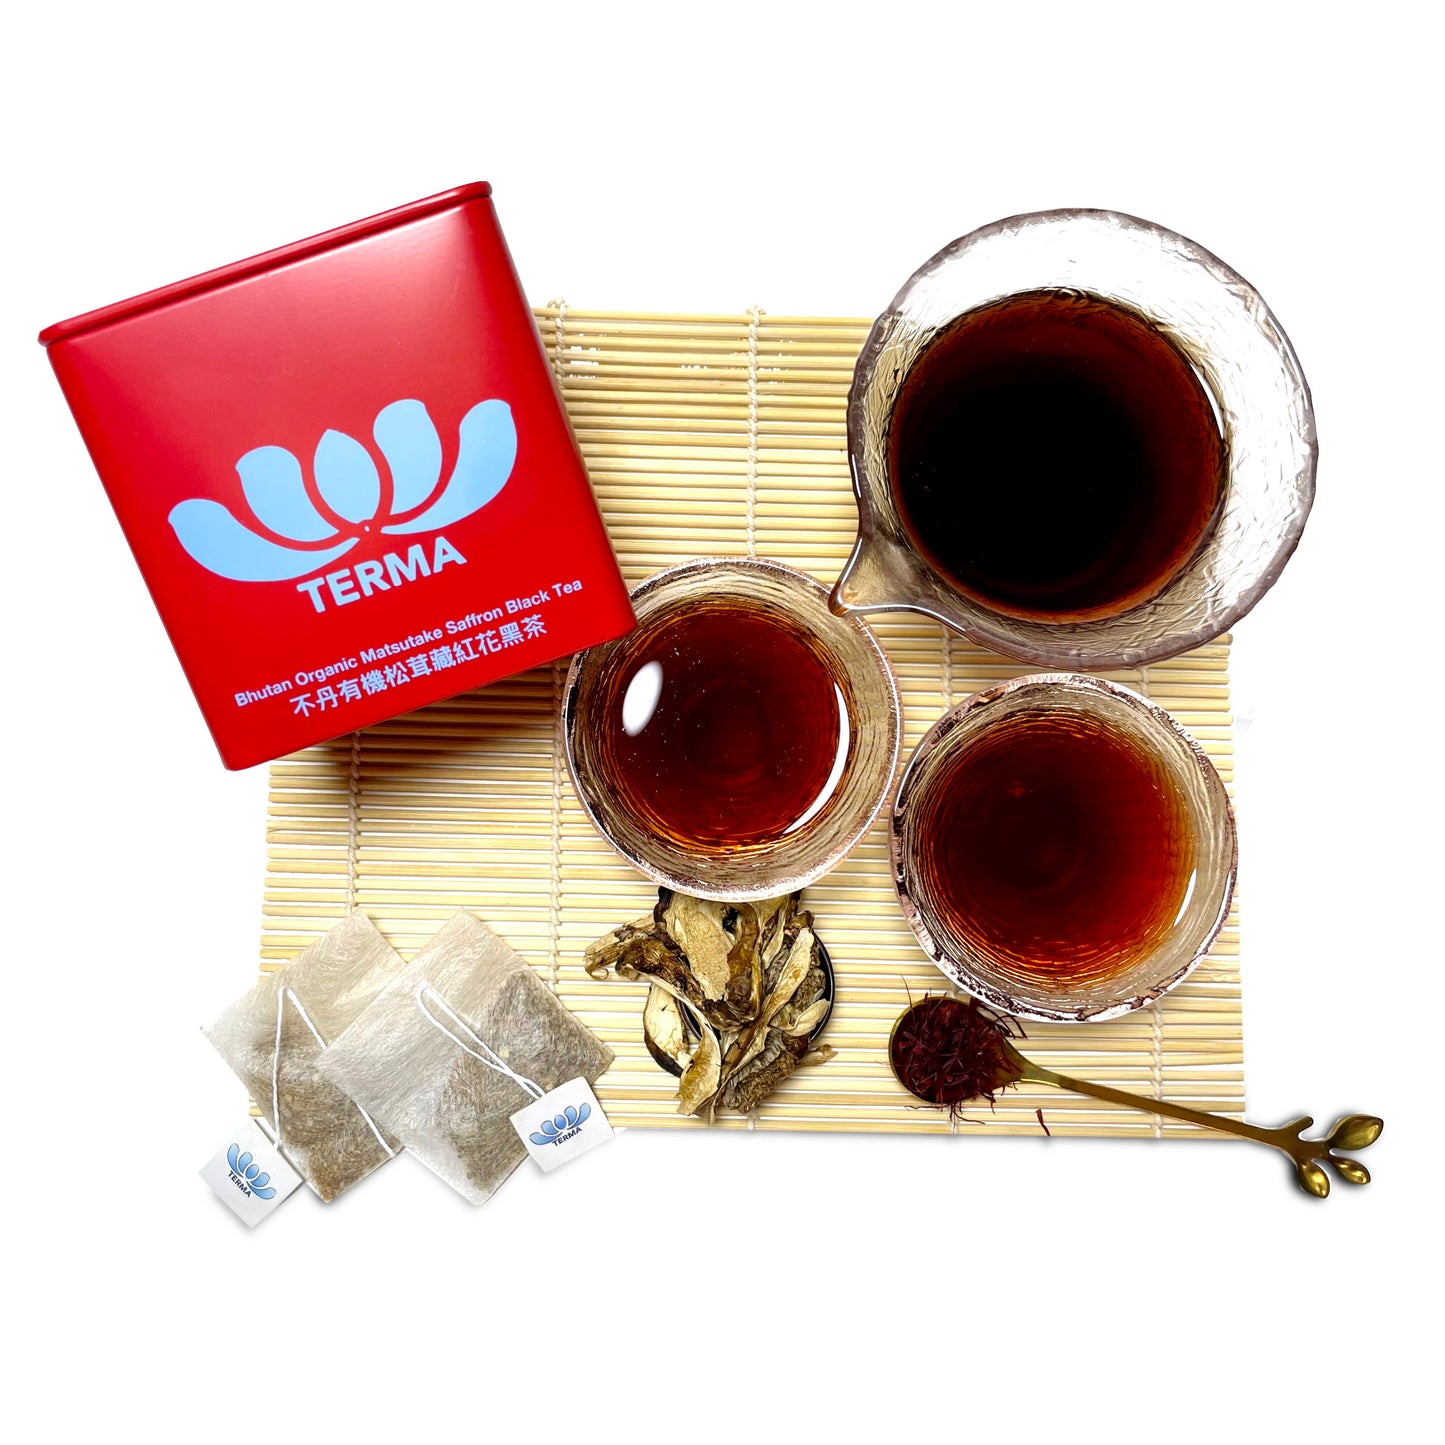 Terma 不丹有機藏紅花松茸茶